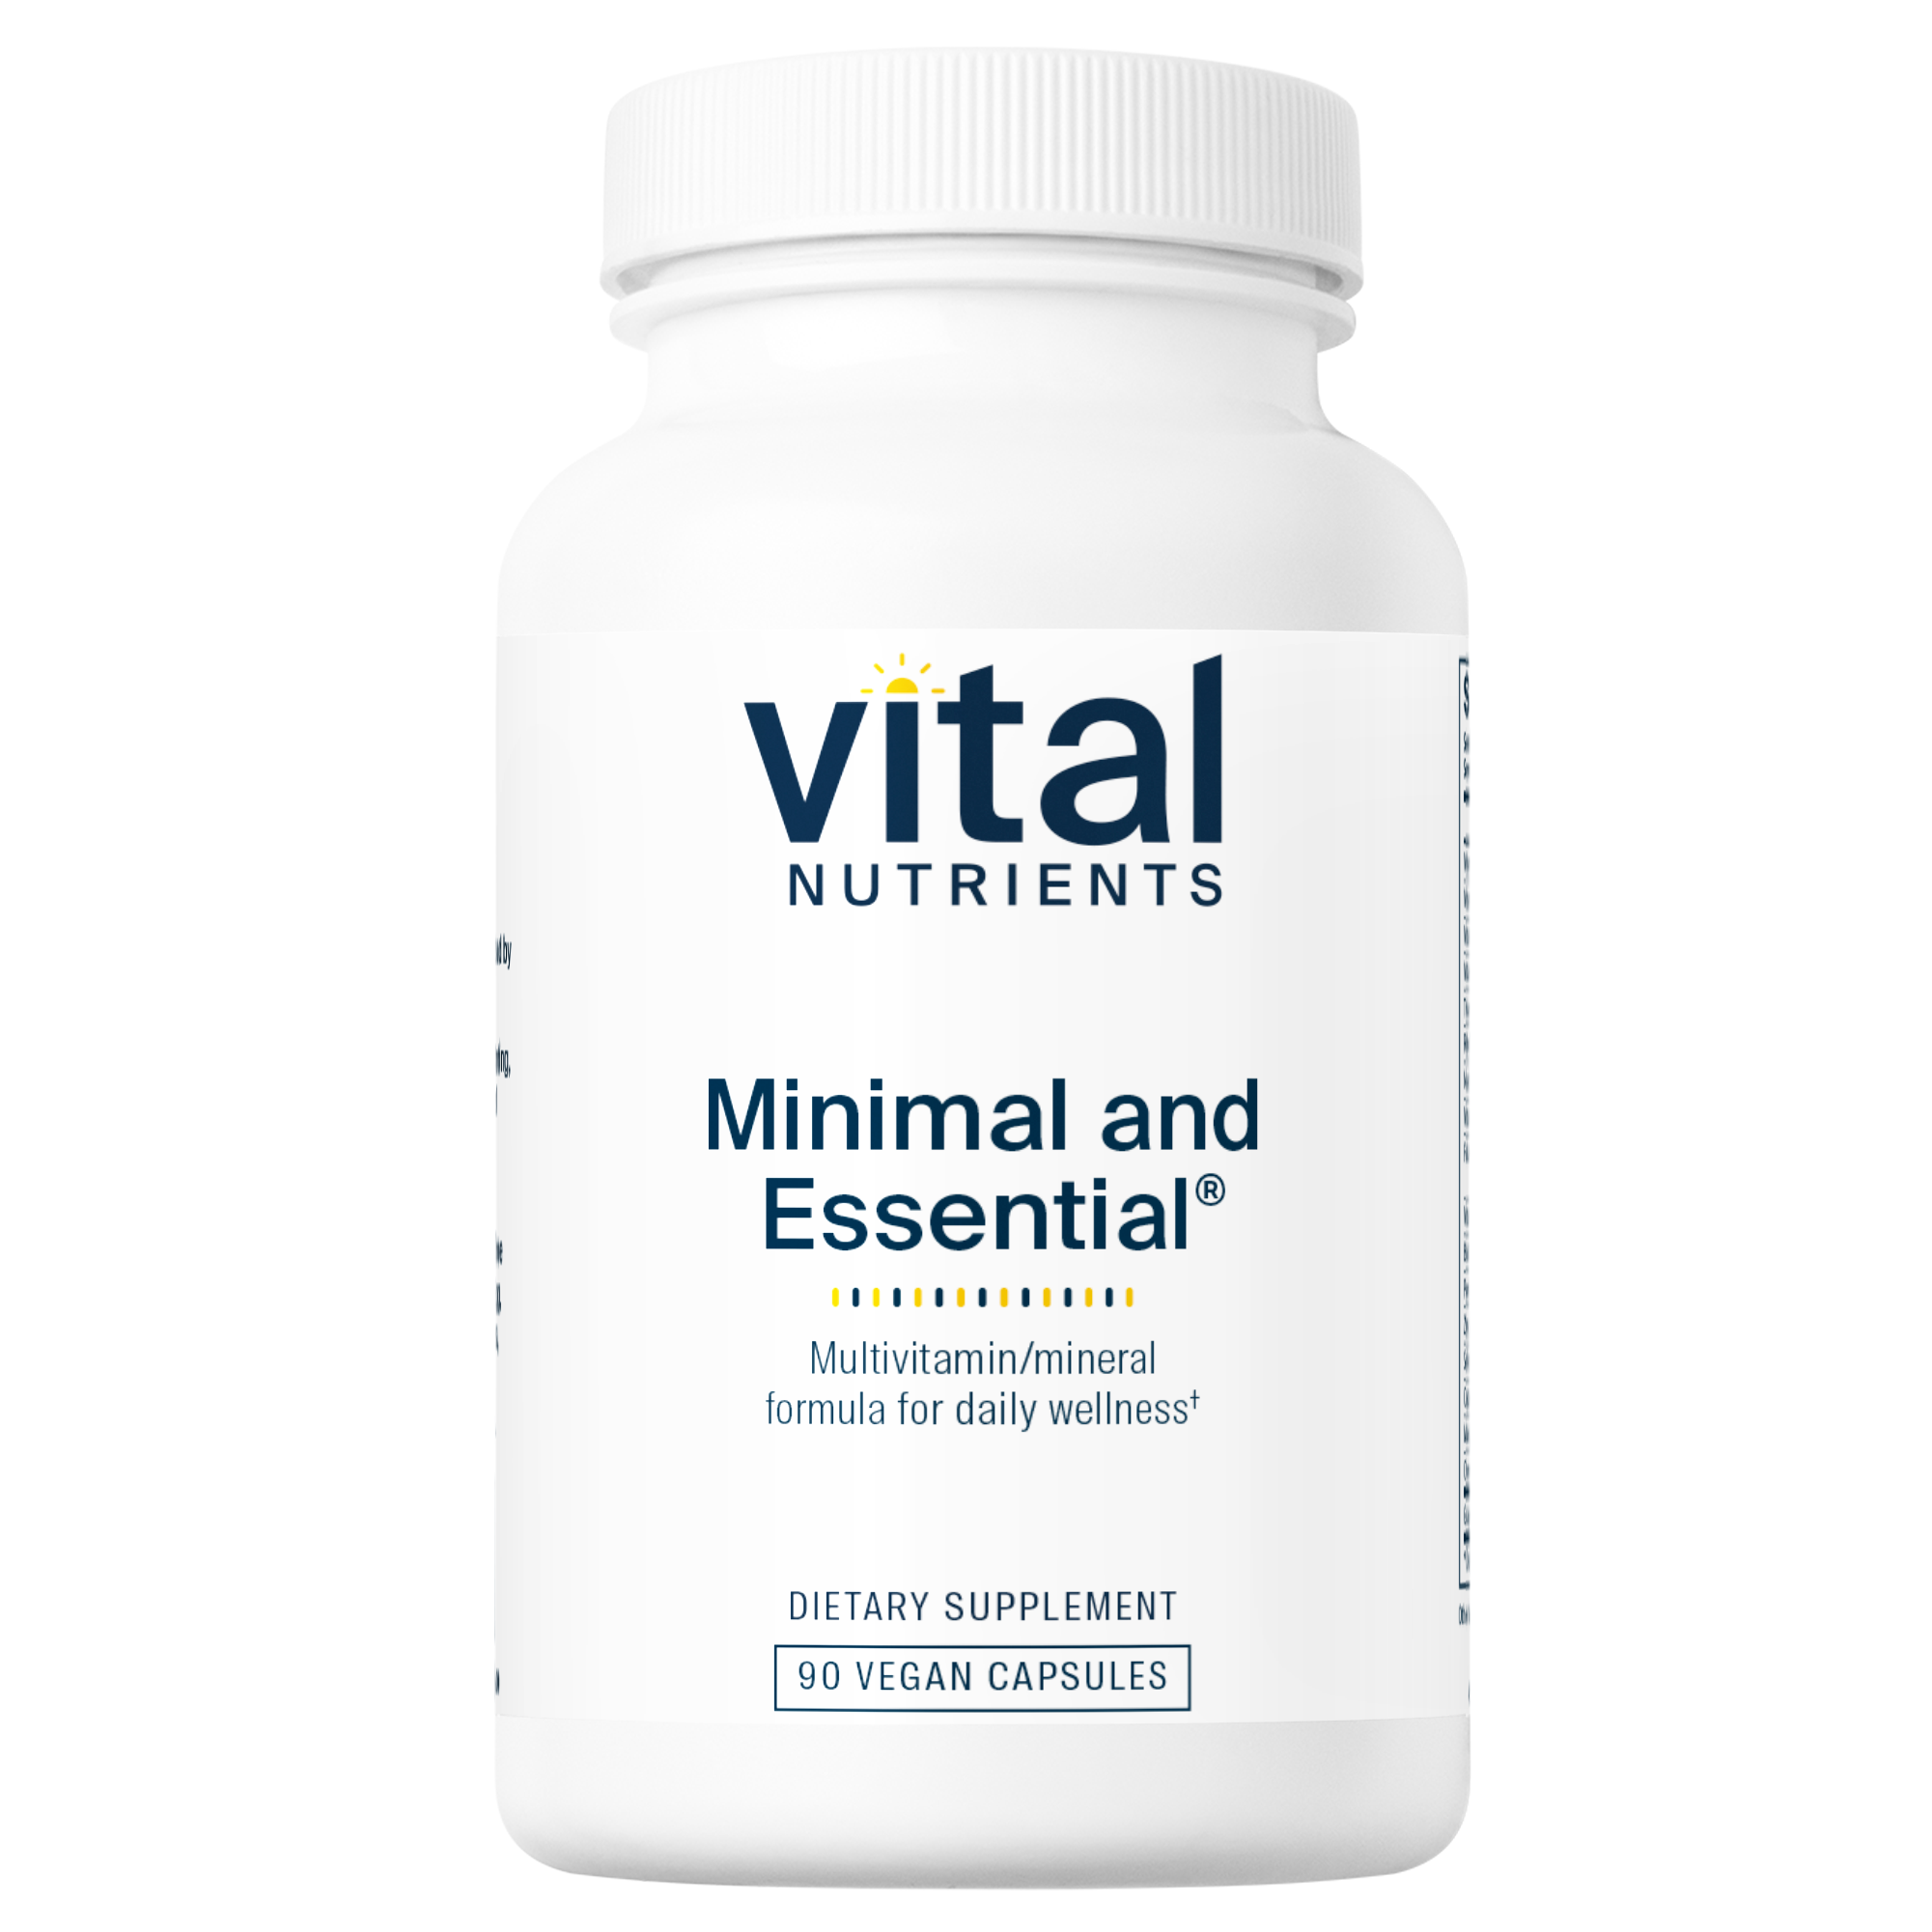 Minimal and Essential® ANTIOXIDANT AND MULTI-VITAMIN FORMULA